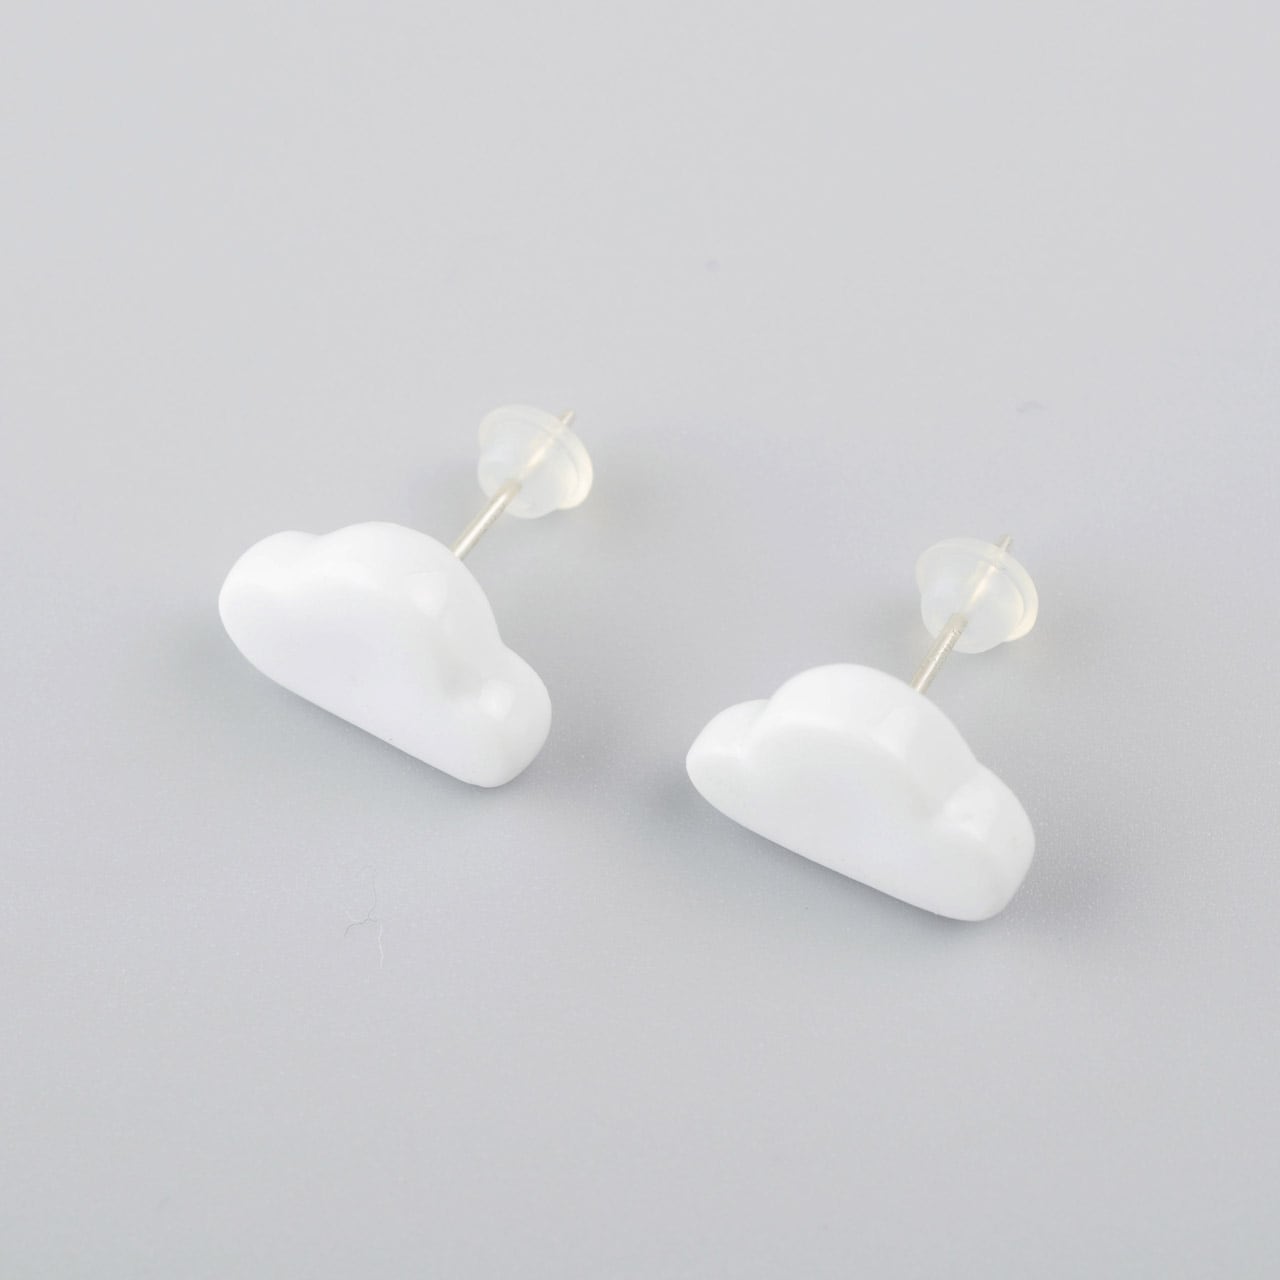 雲のピアス / Cloud Earrings